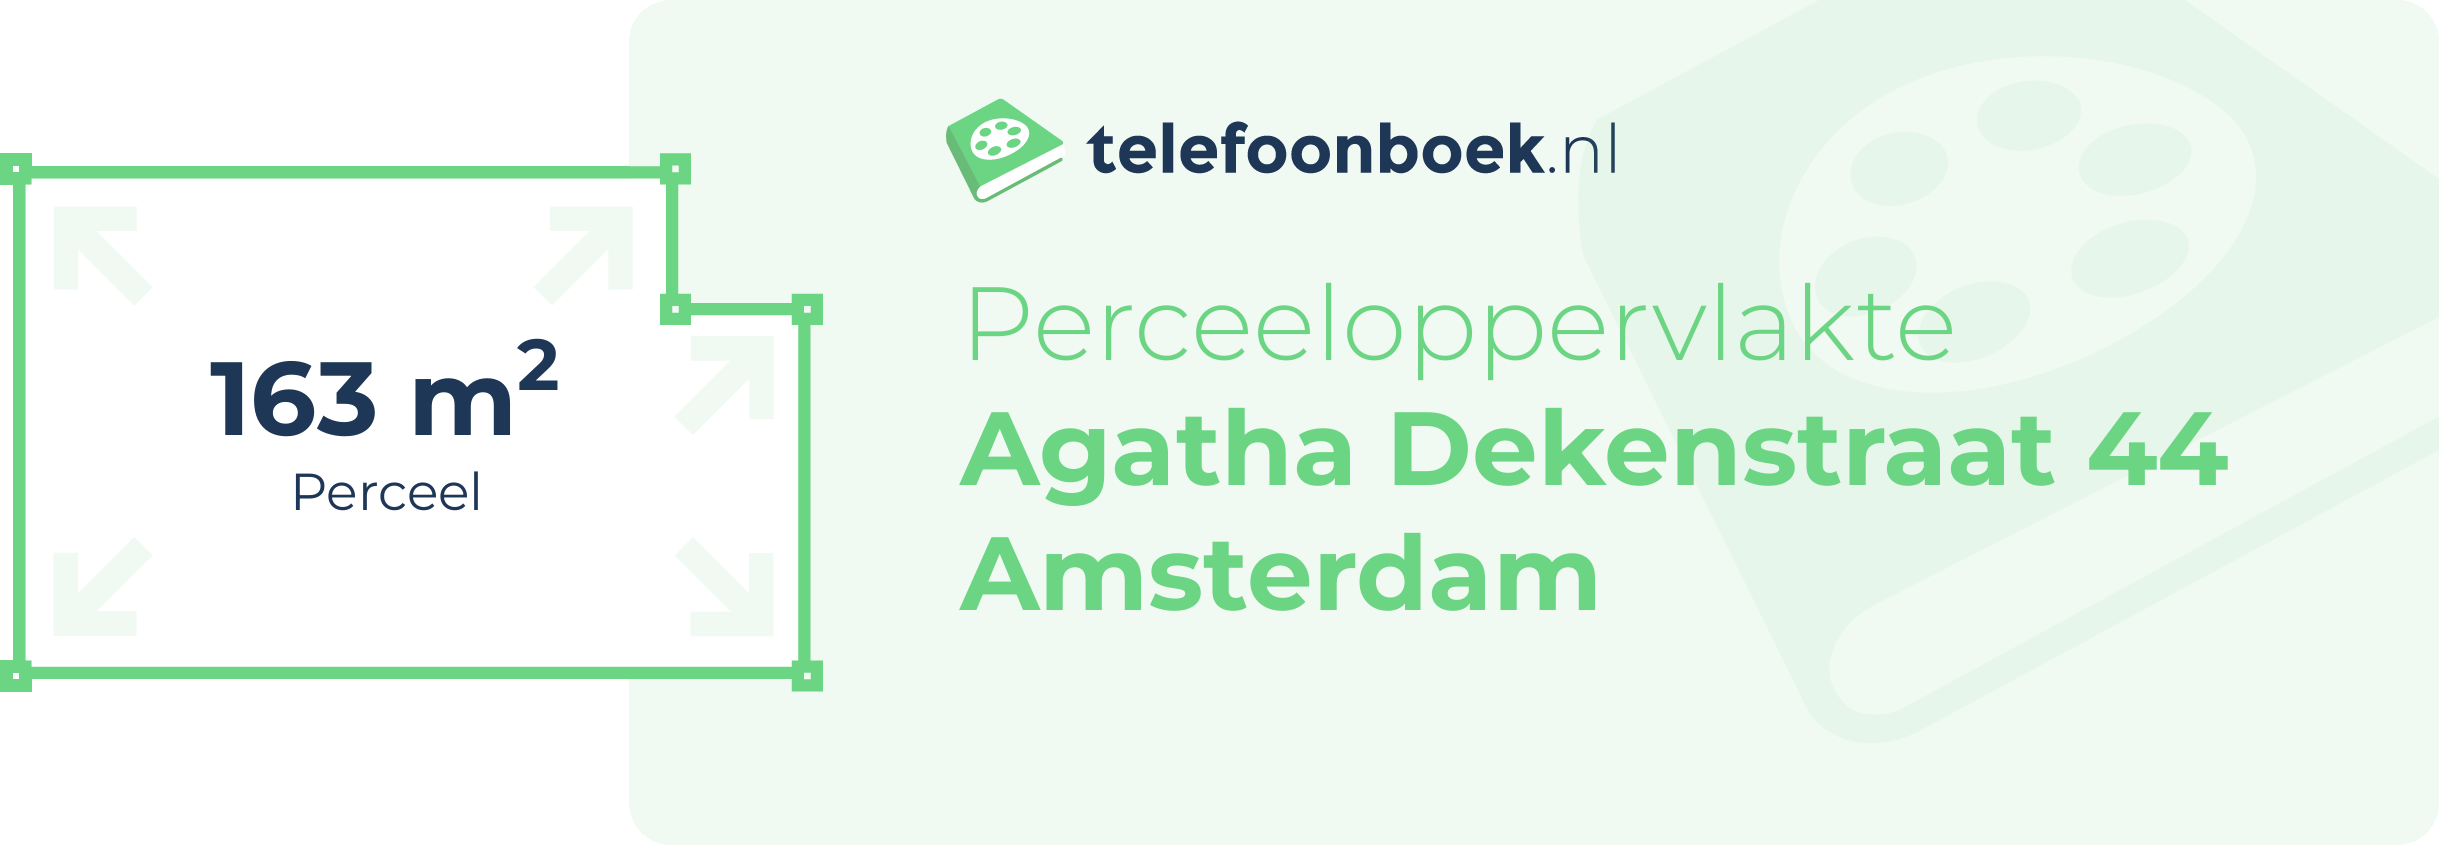 Perceeloppervlakte Agatha Dekenstraat 44 Amsterdam